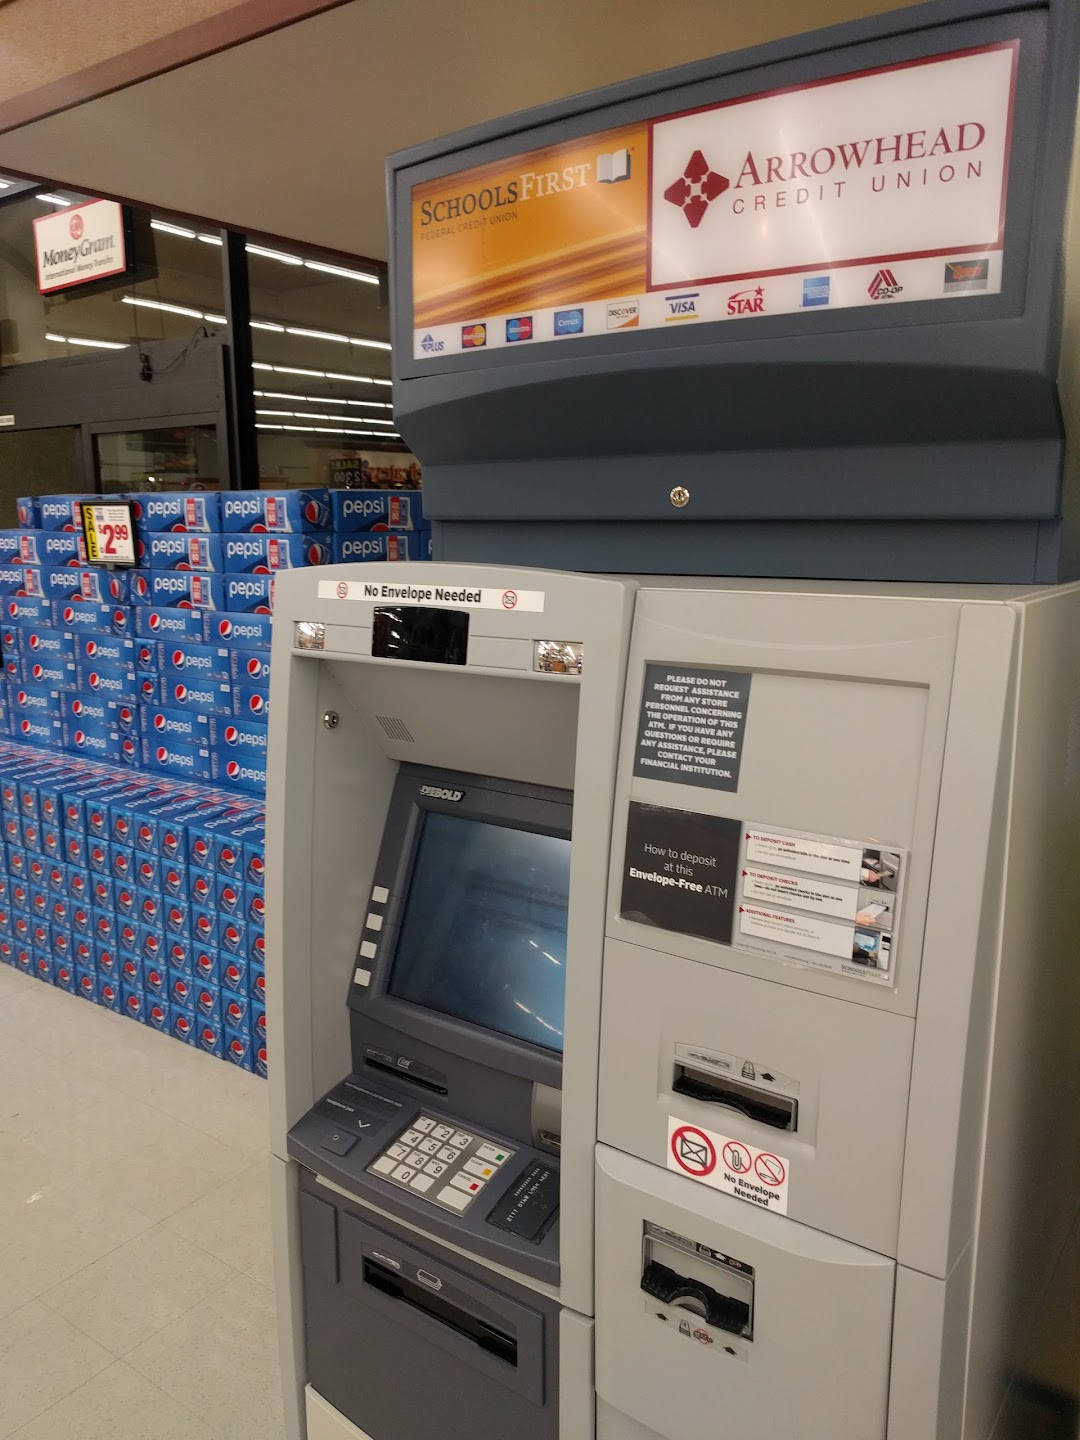 Arrowhead Credit Union ATM Machine